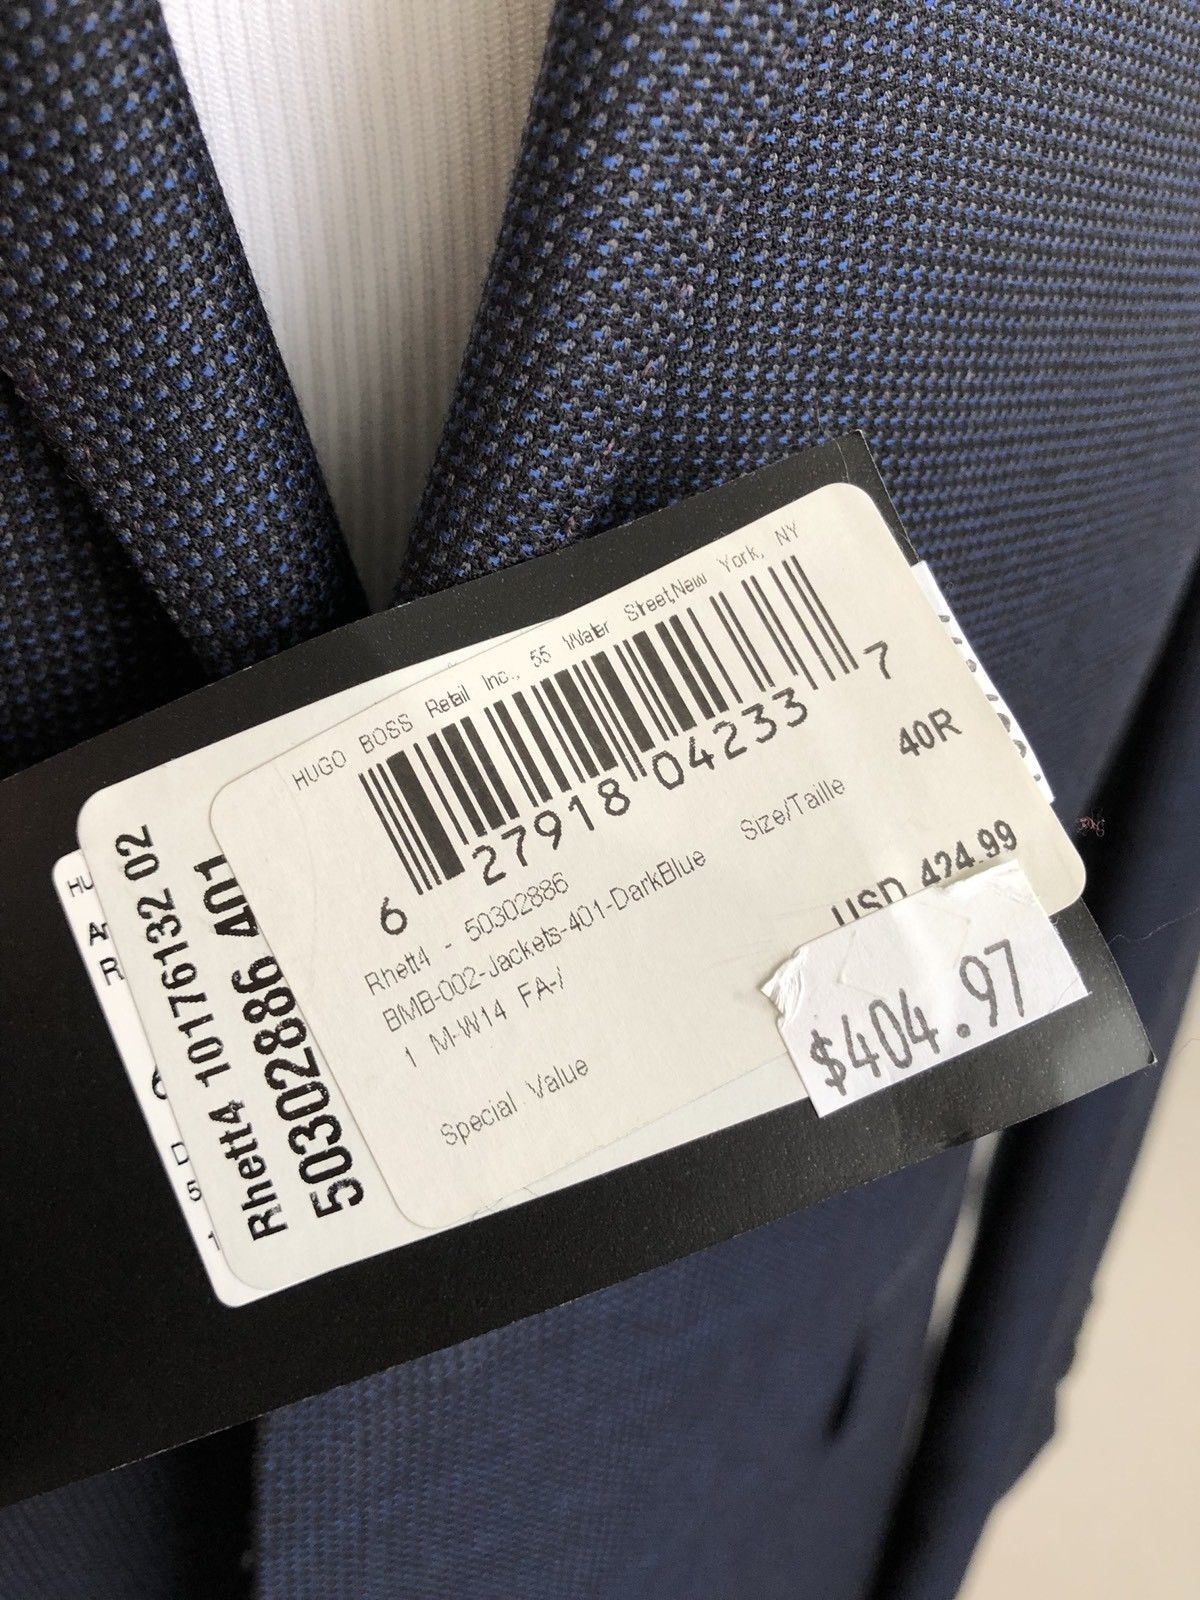 NWT $429 Boss Hugo Boss Rhett4 Wool Sport Coat Jacket Blue 40R US (50R Eu) - BAYSUPERSTORE